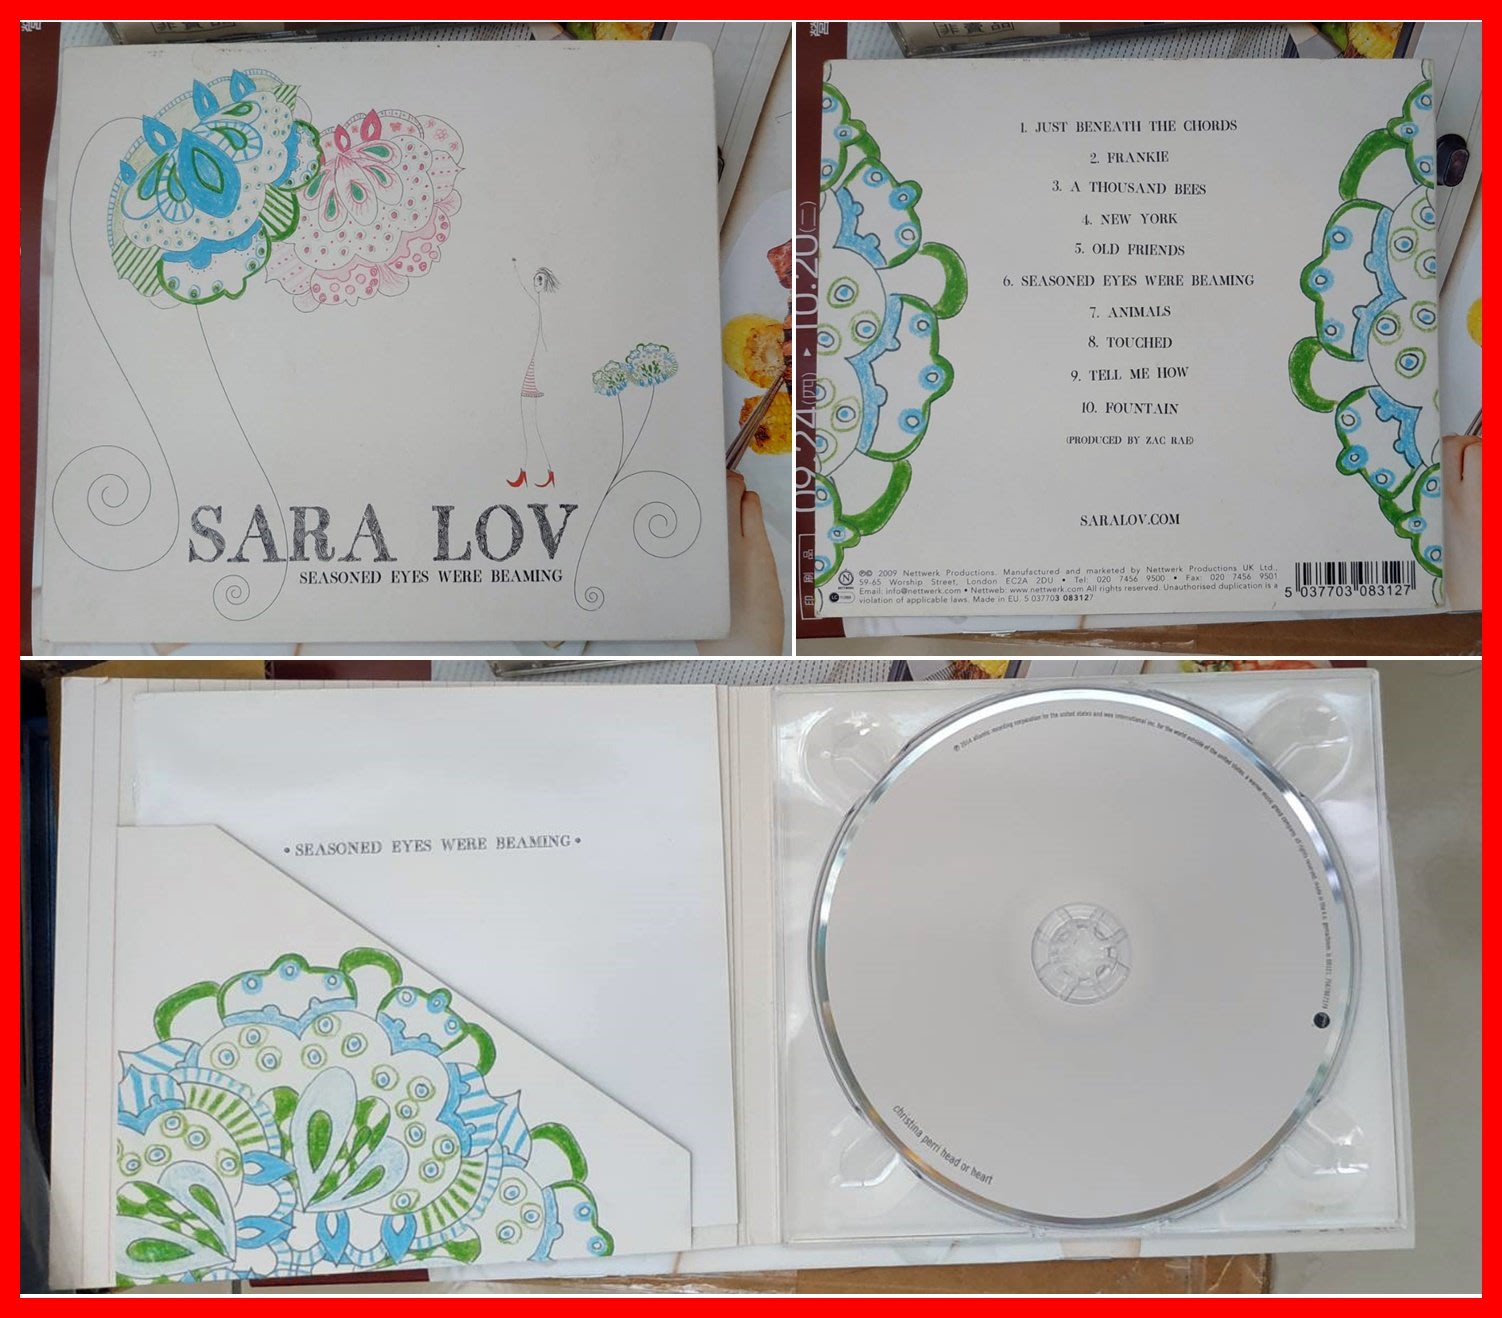 ◎2009-Devics樂團女主唱-莎拉·洛夫-Sara Lov-Seasoned Eyes Were Beaming